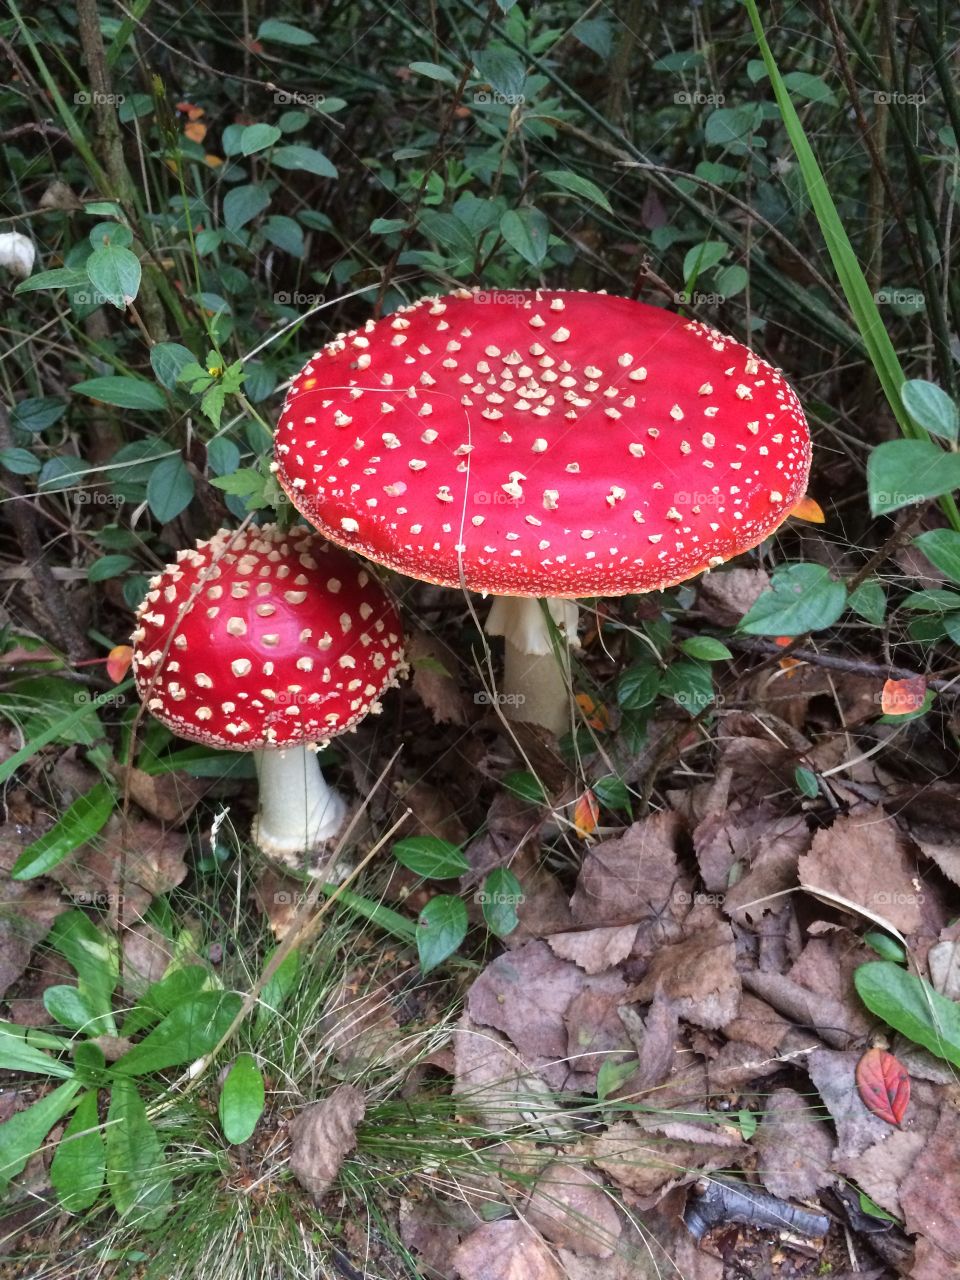 Mushroom amanita muscaria fungi hongo alucinógeno argentina Córdoba naturaleza nature 